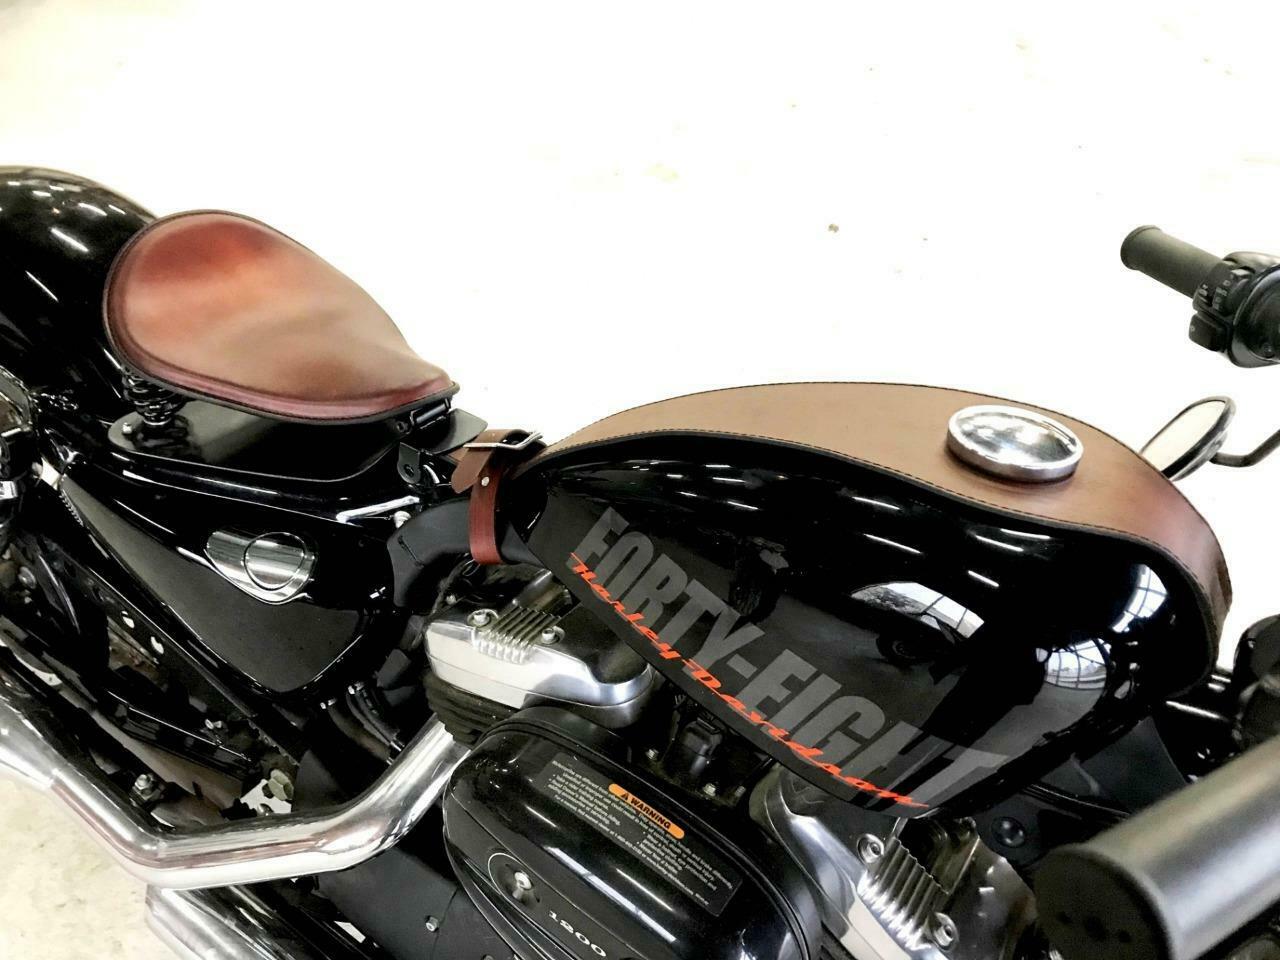 Tank Bib 2004-2022 Harley Sportster Brown Leather Fits All Models